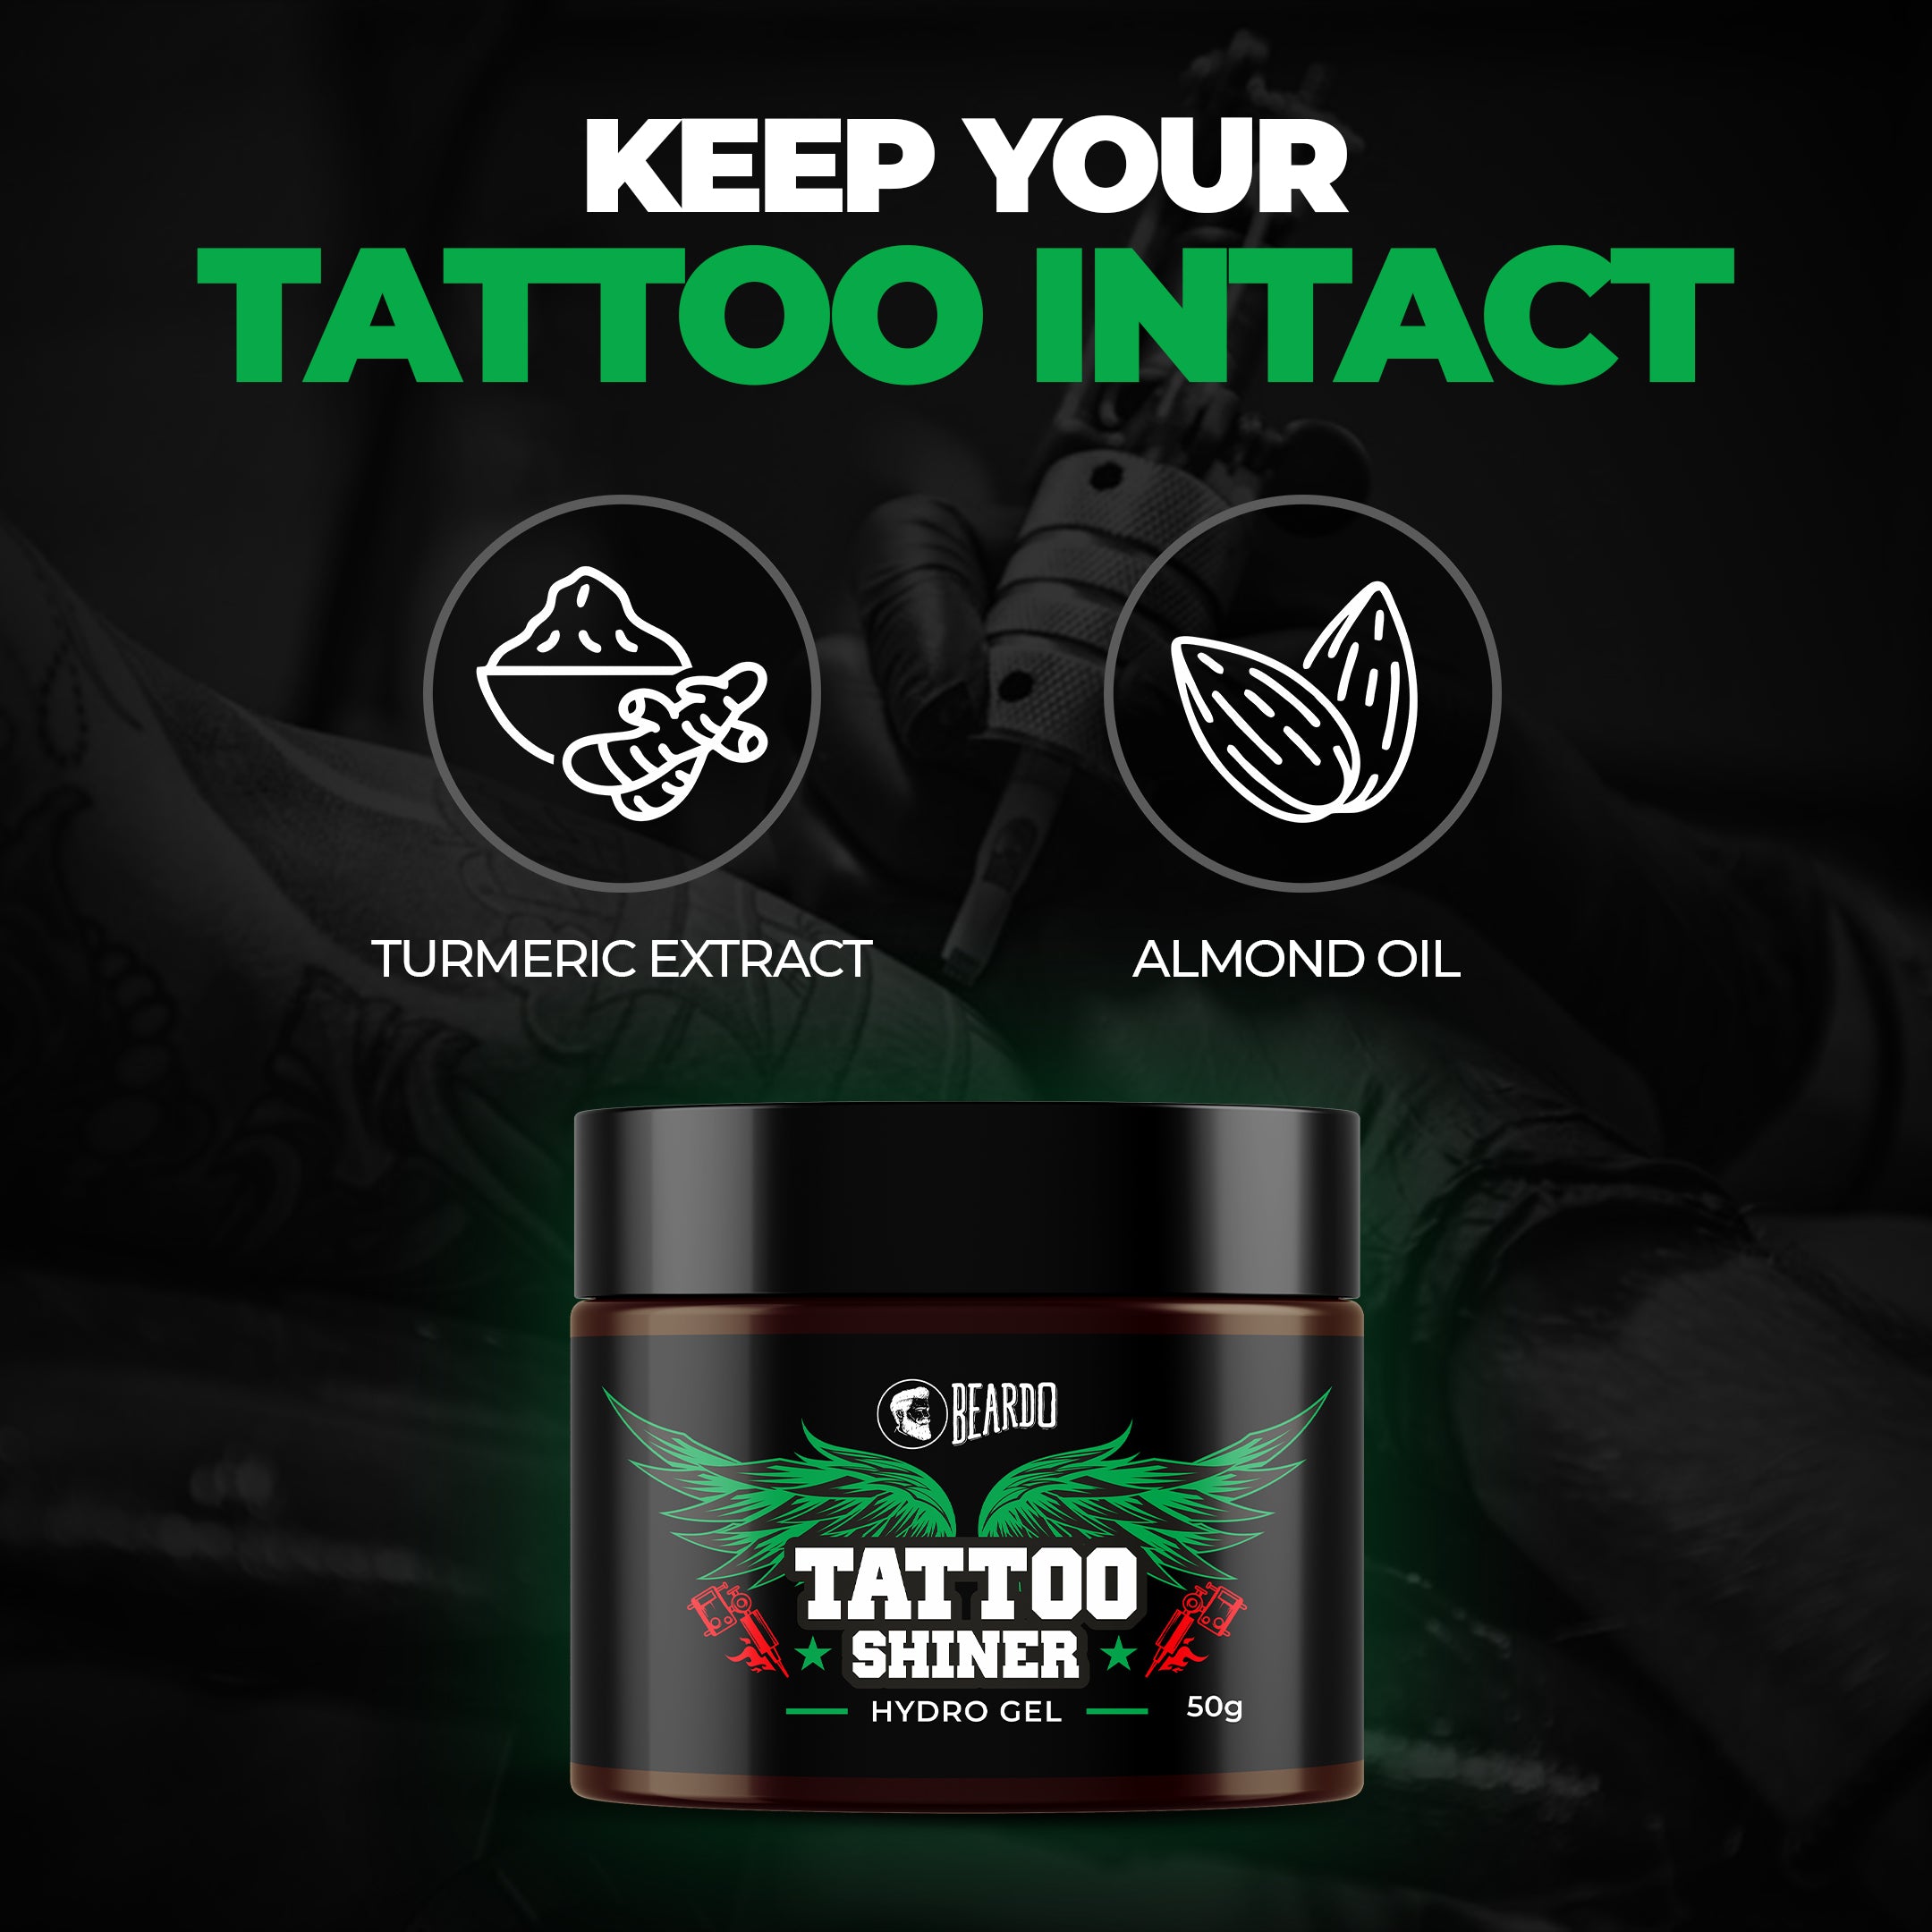 Tatoo shiner  How to care tattoo  Hydro gel  Beardo Tattoo shine gel  review in hindi  YouTube